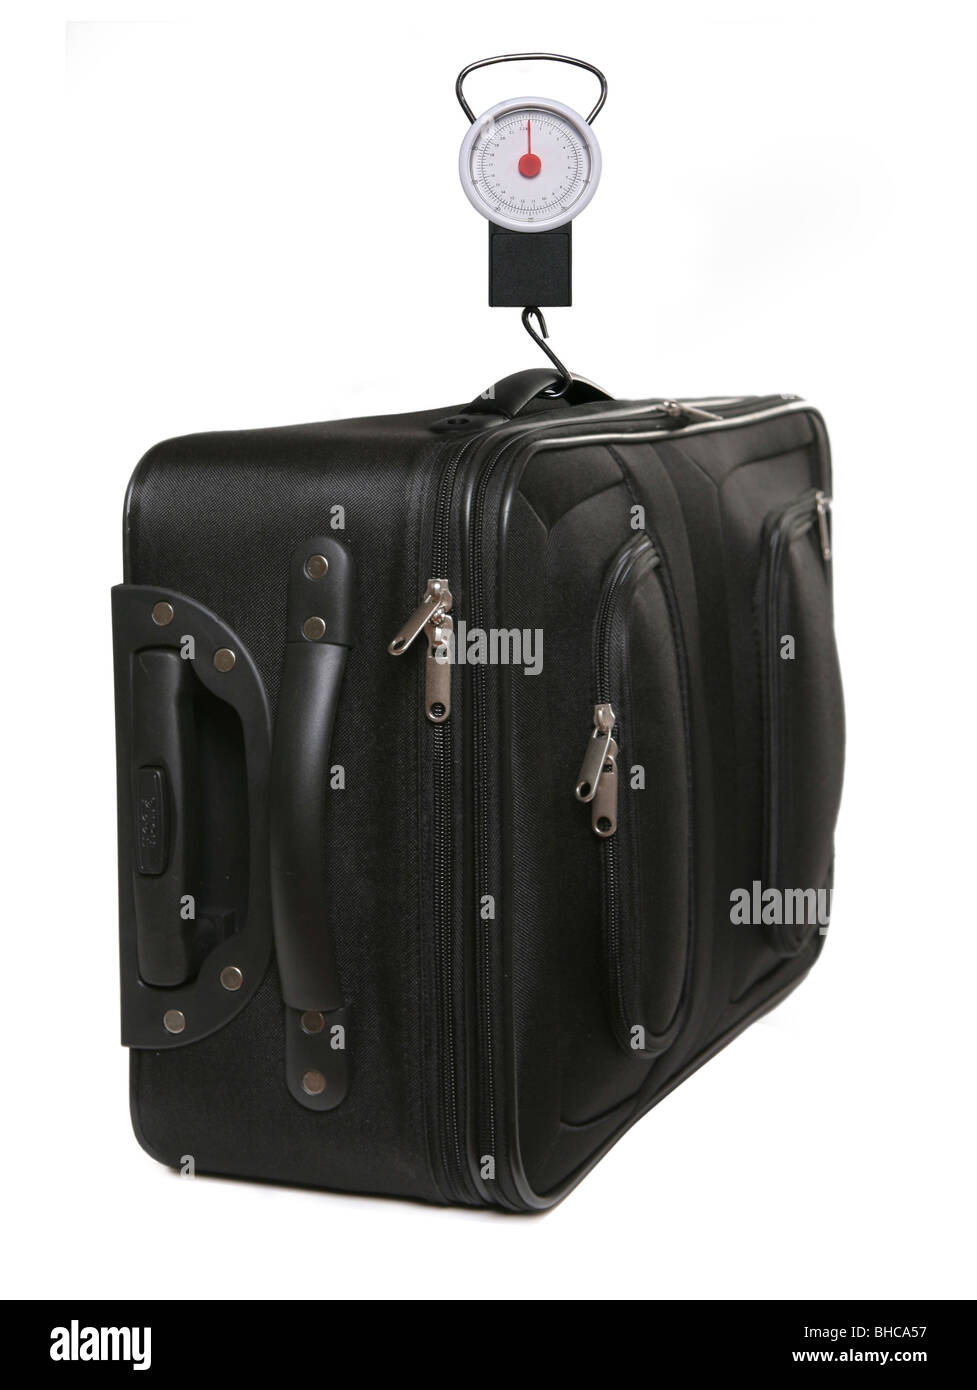 https://c8.alamy.com/comp/BHCA57/suitcase-with-hand-held-scales-BHCA57.jpg